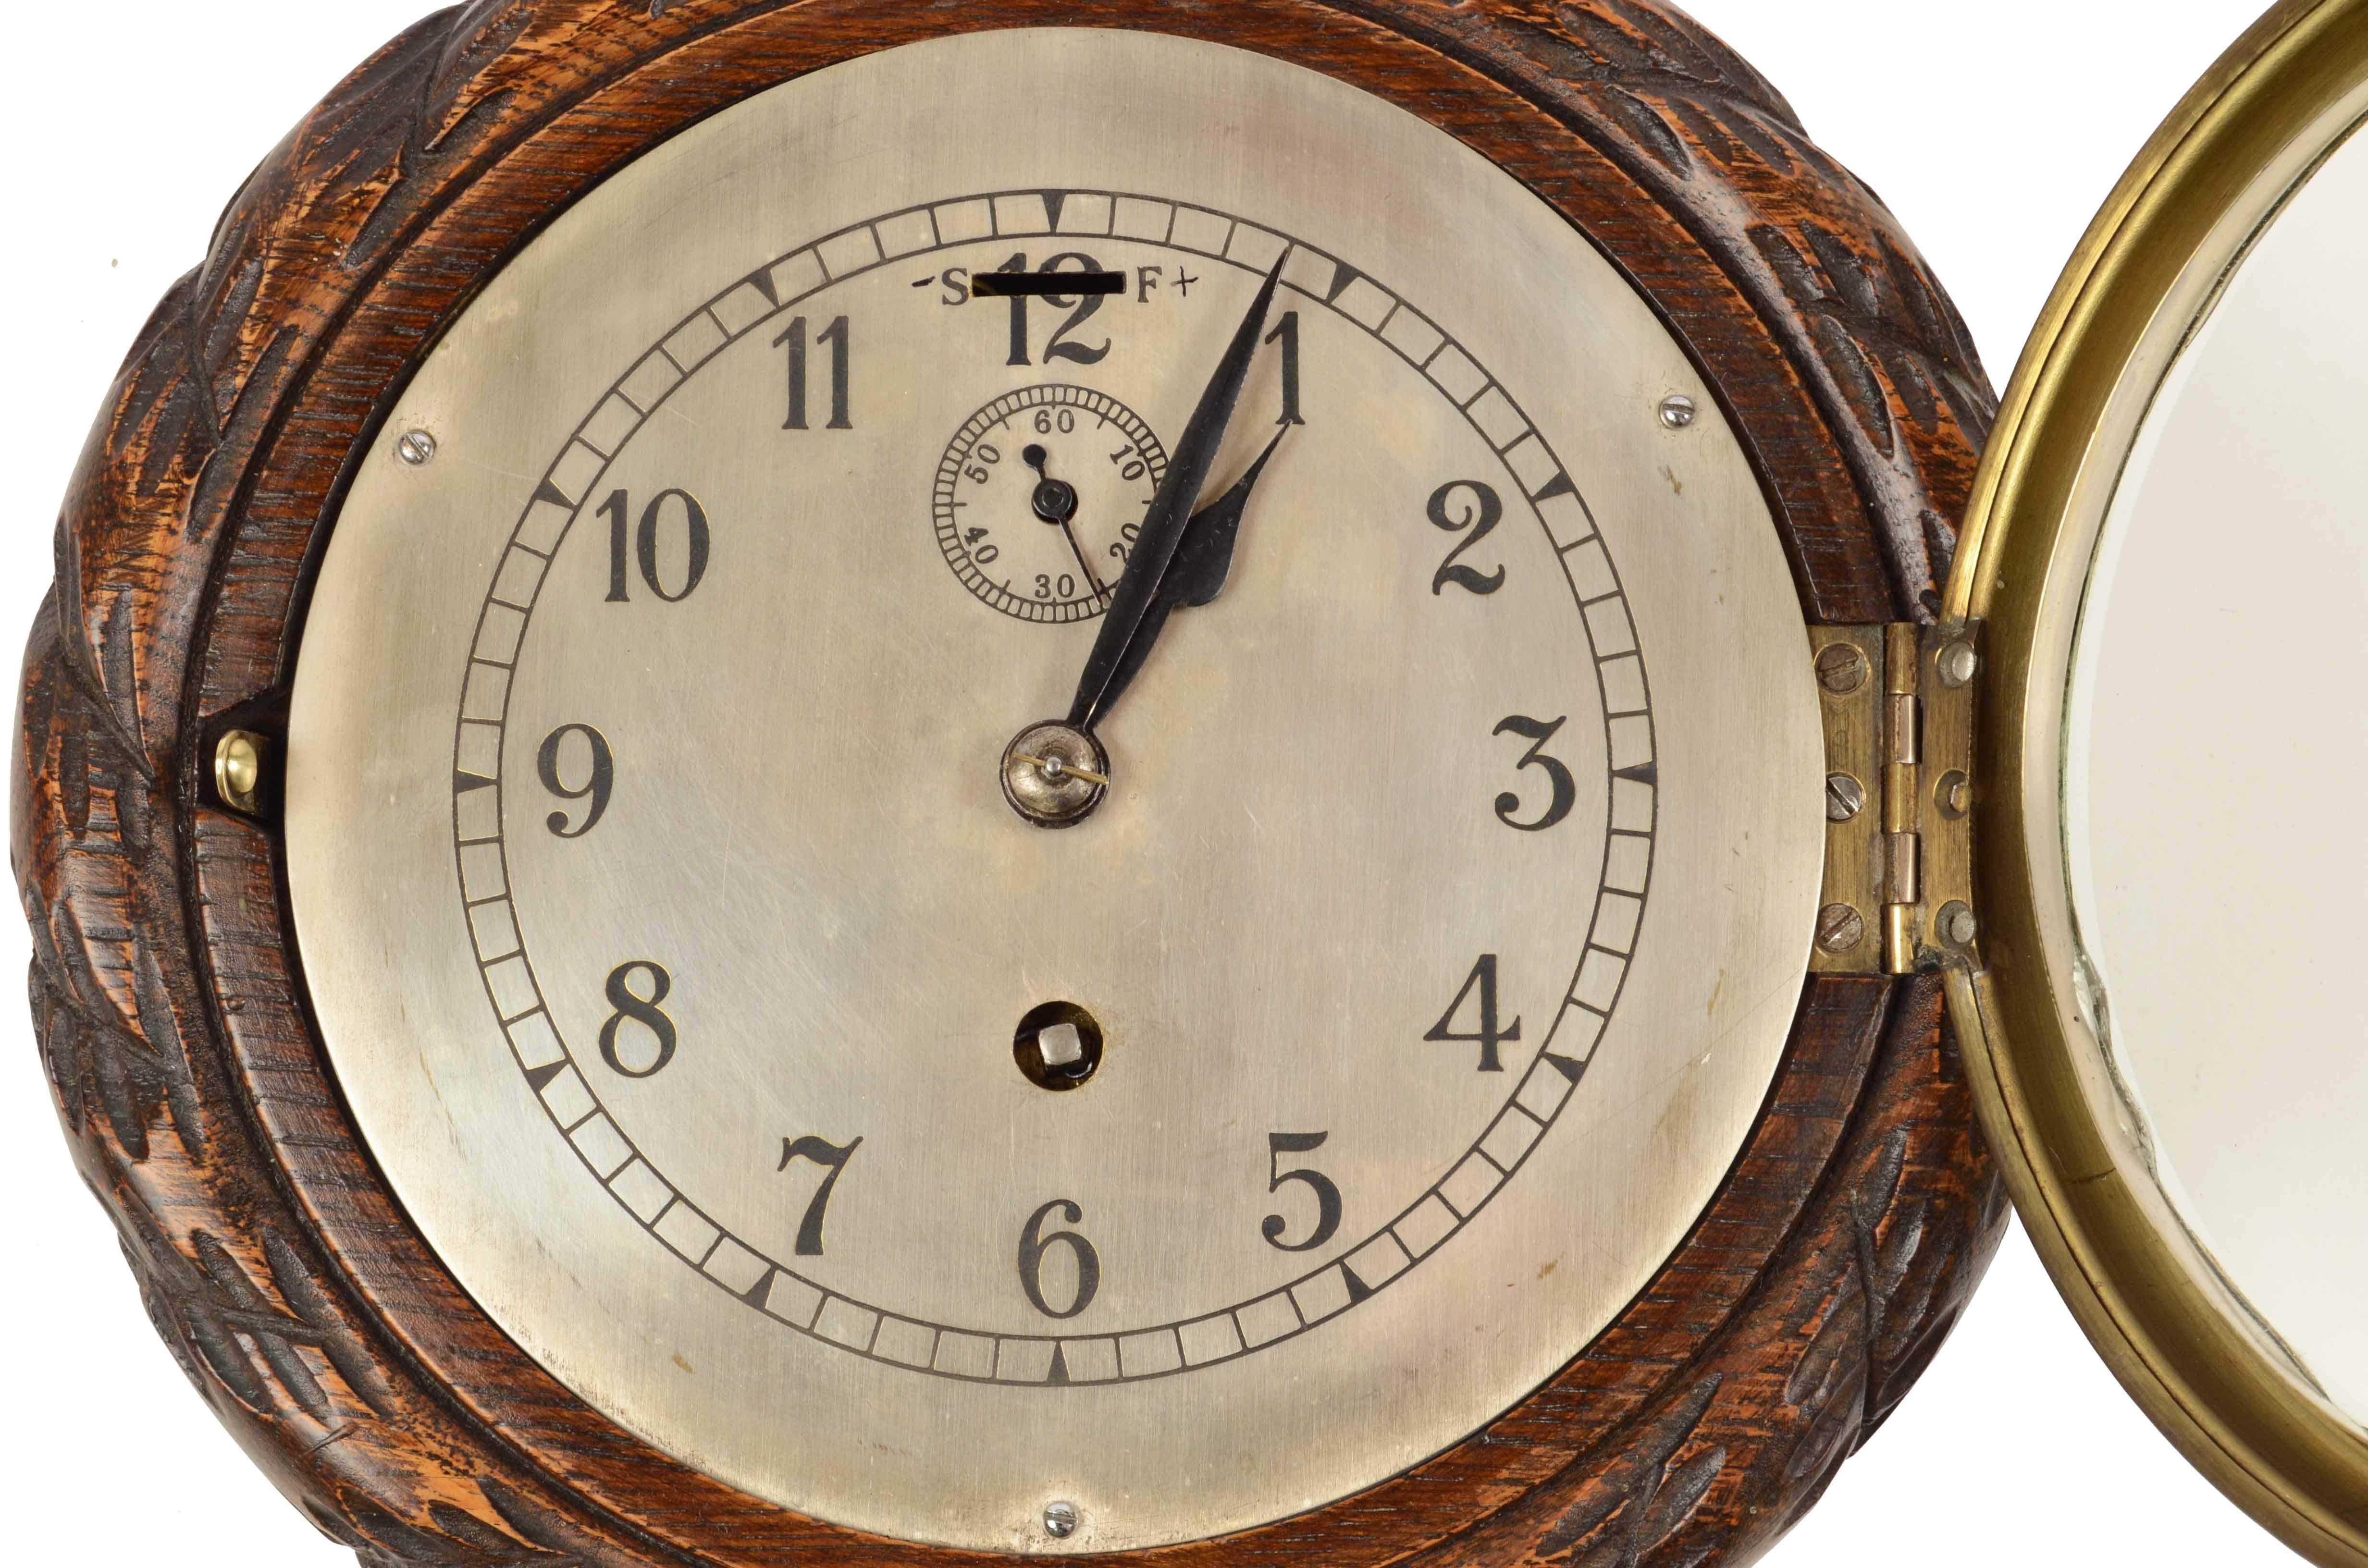 1930s Brass and Wood Shipboard Navigation Clock Antique Nautical Instrument 1